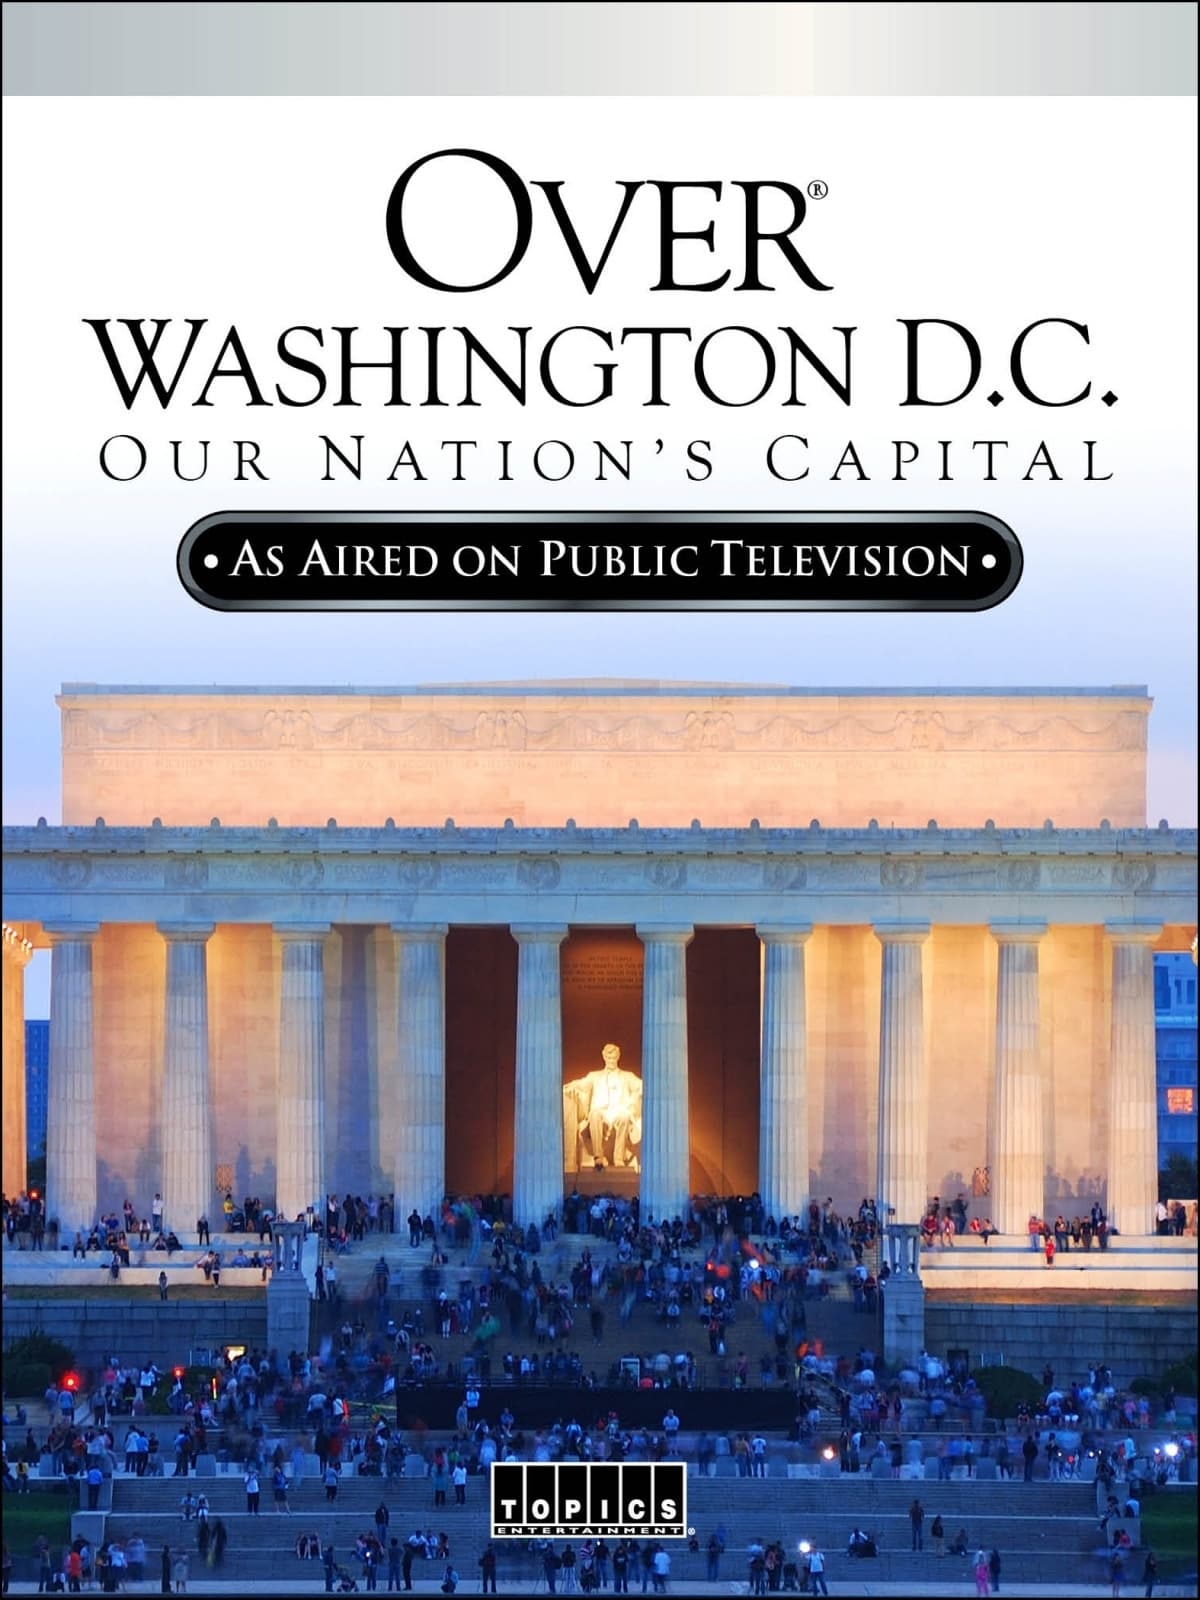 Over Washington D.C.: Our Nation's Capital